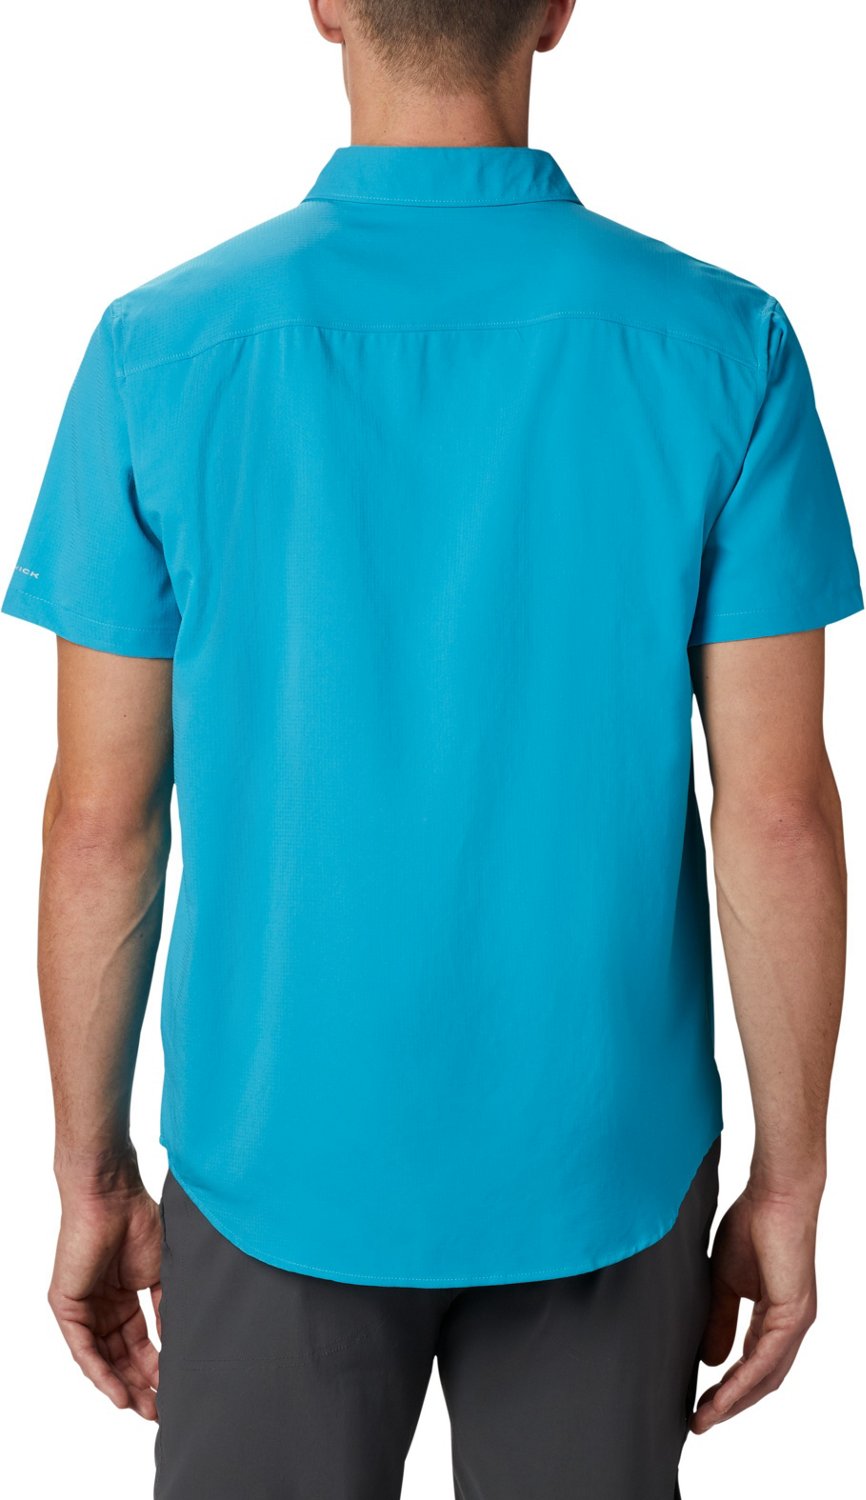 Columbia Sportswear Men's Utilizer II Solid Short Sleeve Shirt